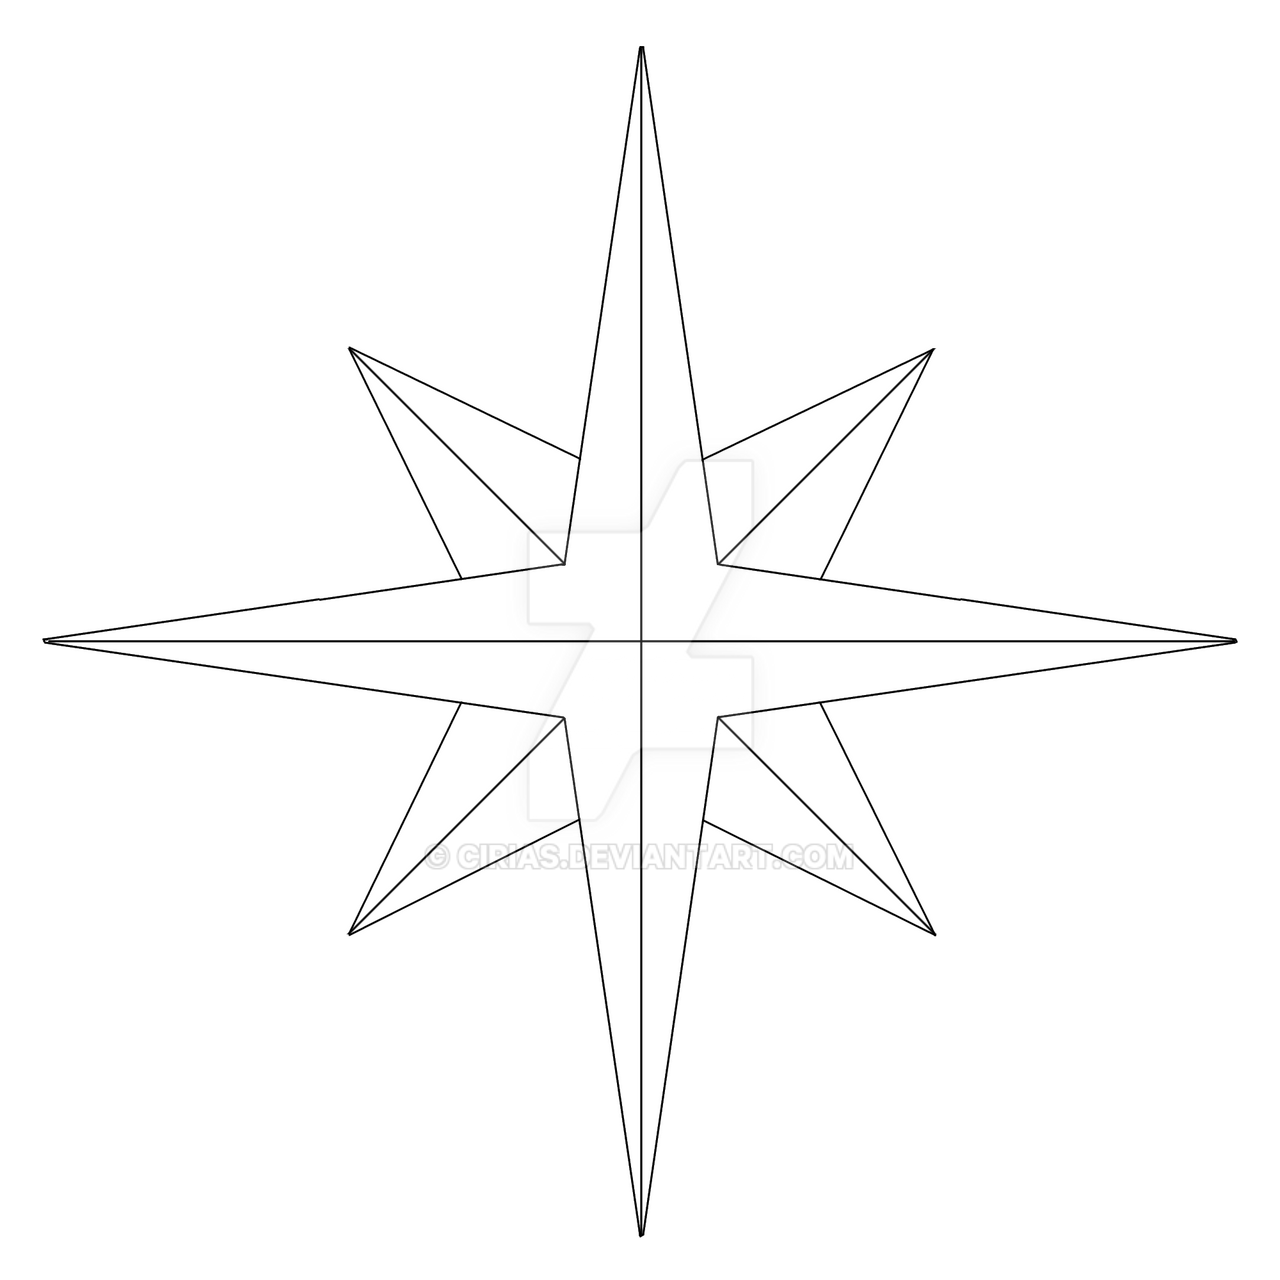 compass-rose-template-by-cirias-on-deviantart